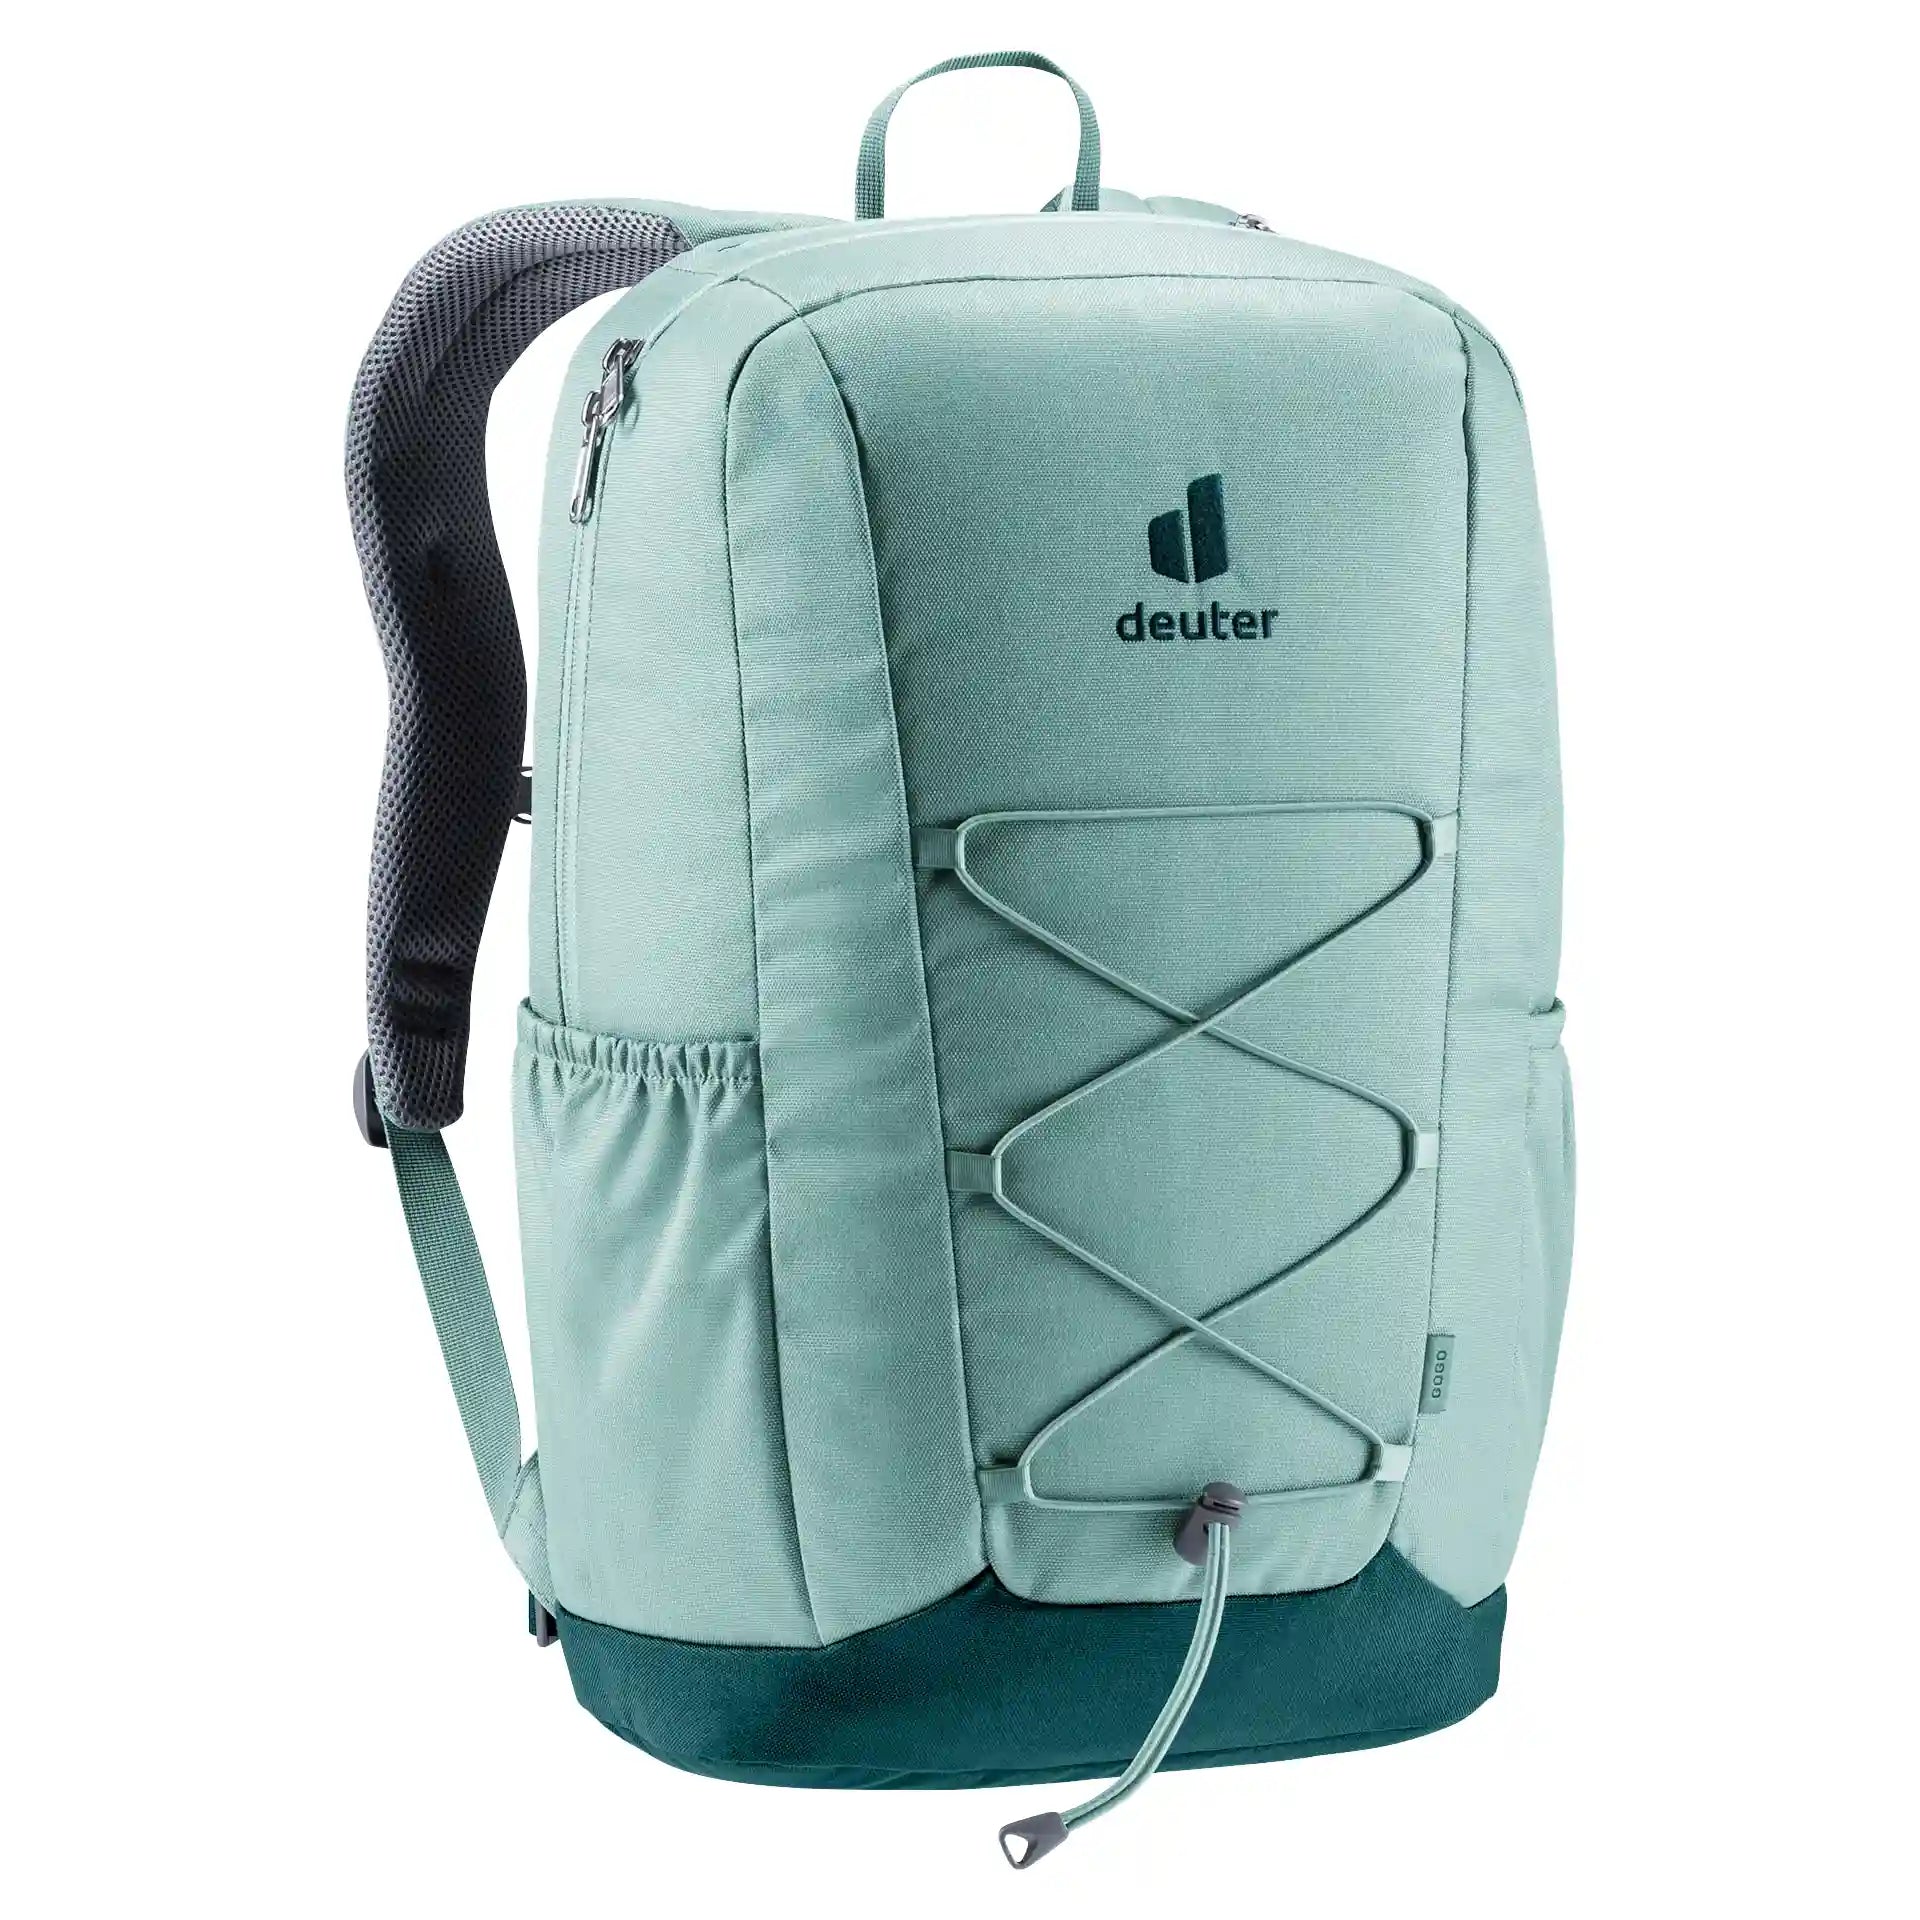 Deuter Gogo Lifestyle Backpack 46 cm - Jade Deepsea